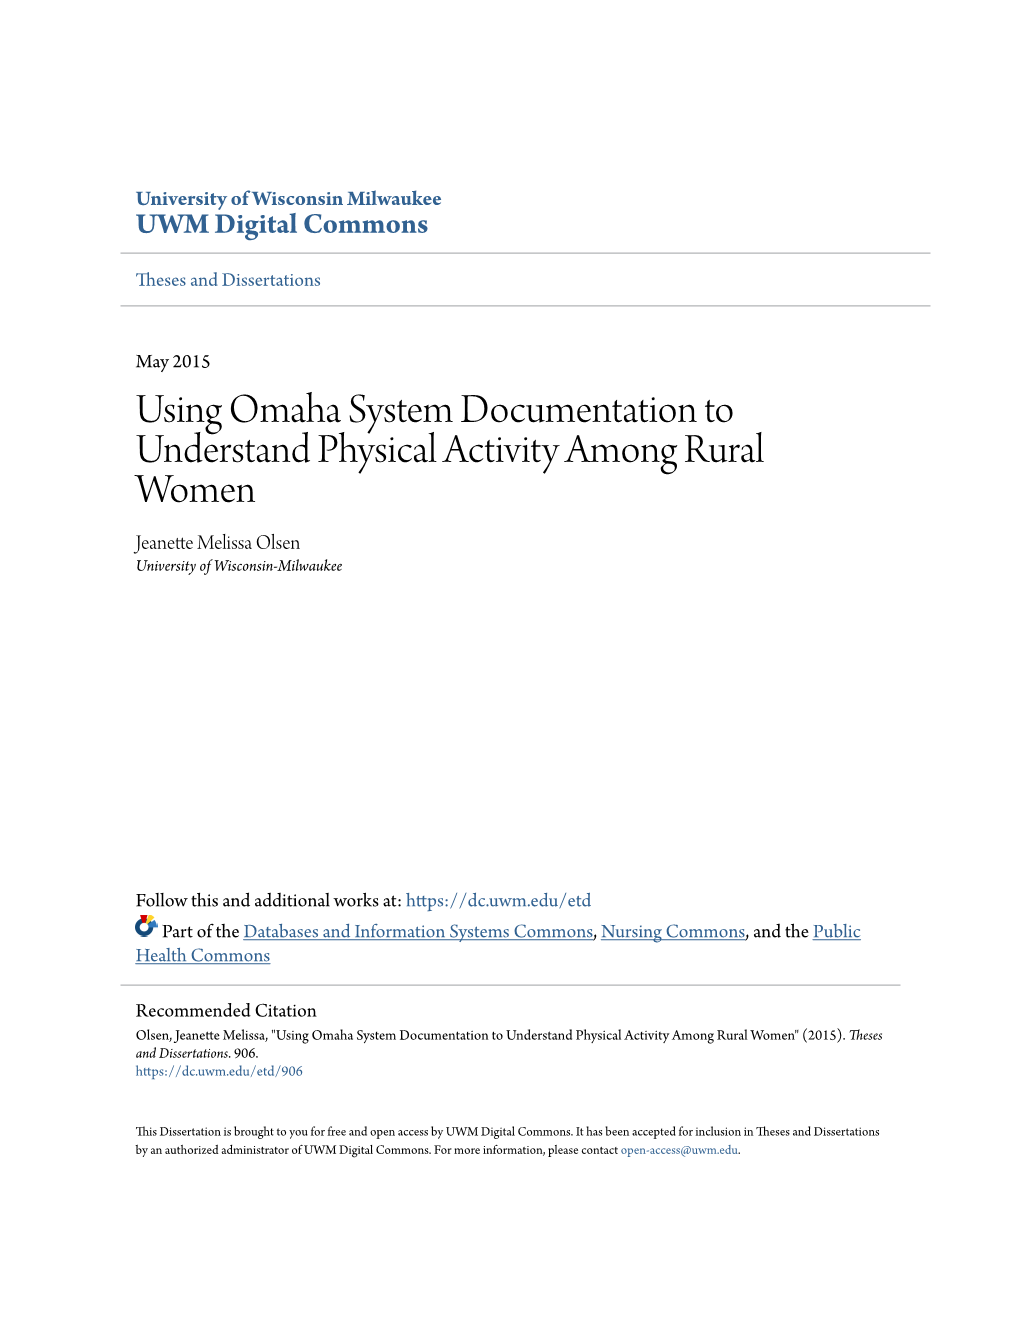 Using Omaha System Documentation to Understand Physical Activity Among Rural Women Jeanette Melissa Olsen University of Wisconsin-Milwaukee